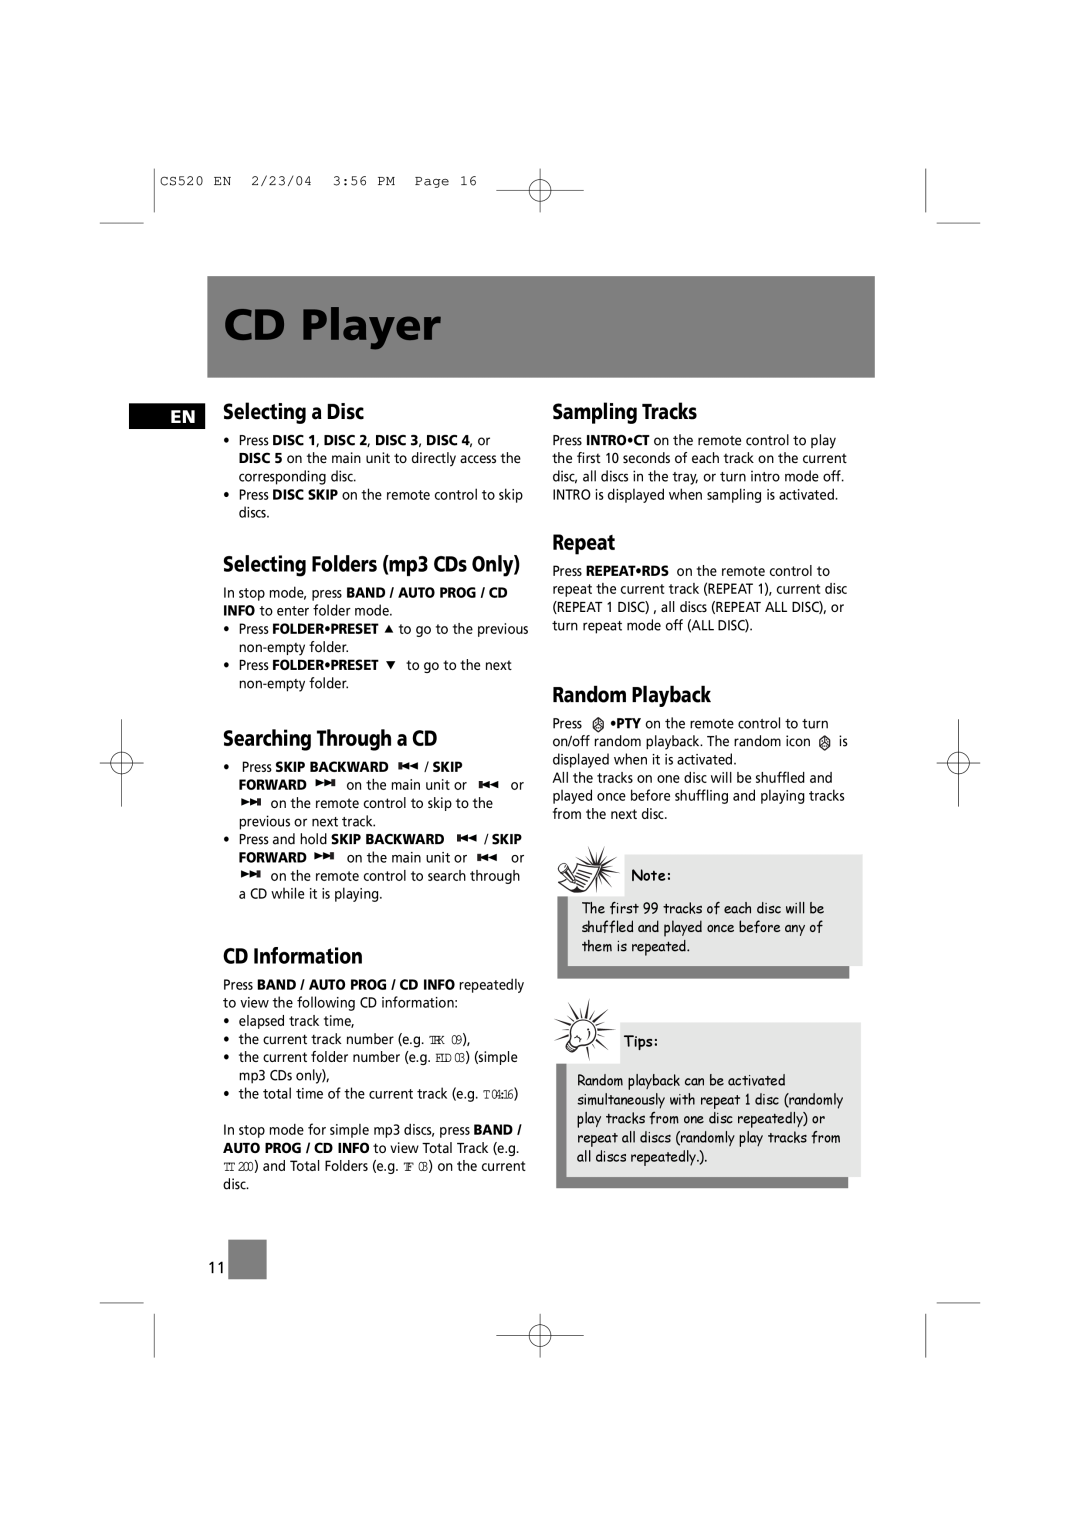 Technicolor - Thomson CS520 EN Selecting a Disc, Sampling Tracks, Searching Through a CD, CD Information, Repeat, Tips 